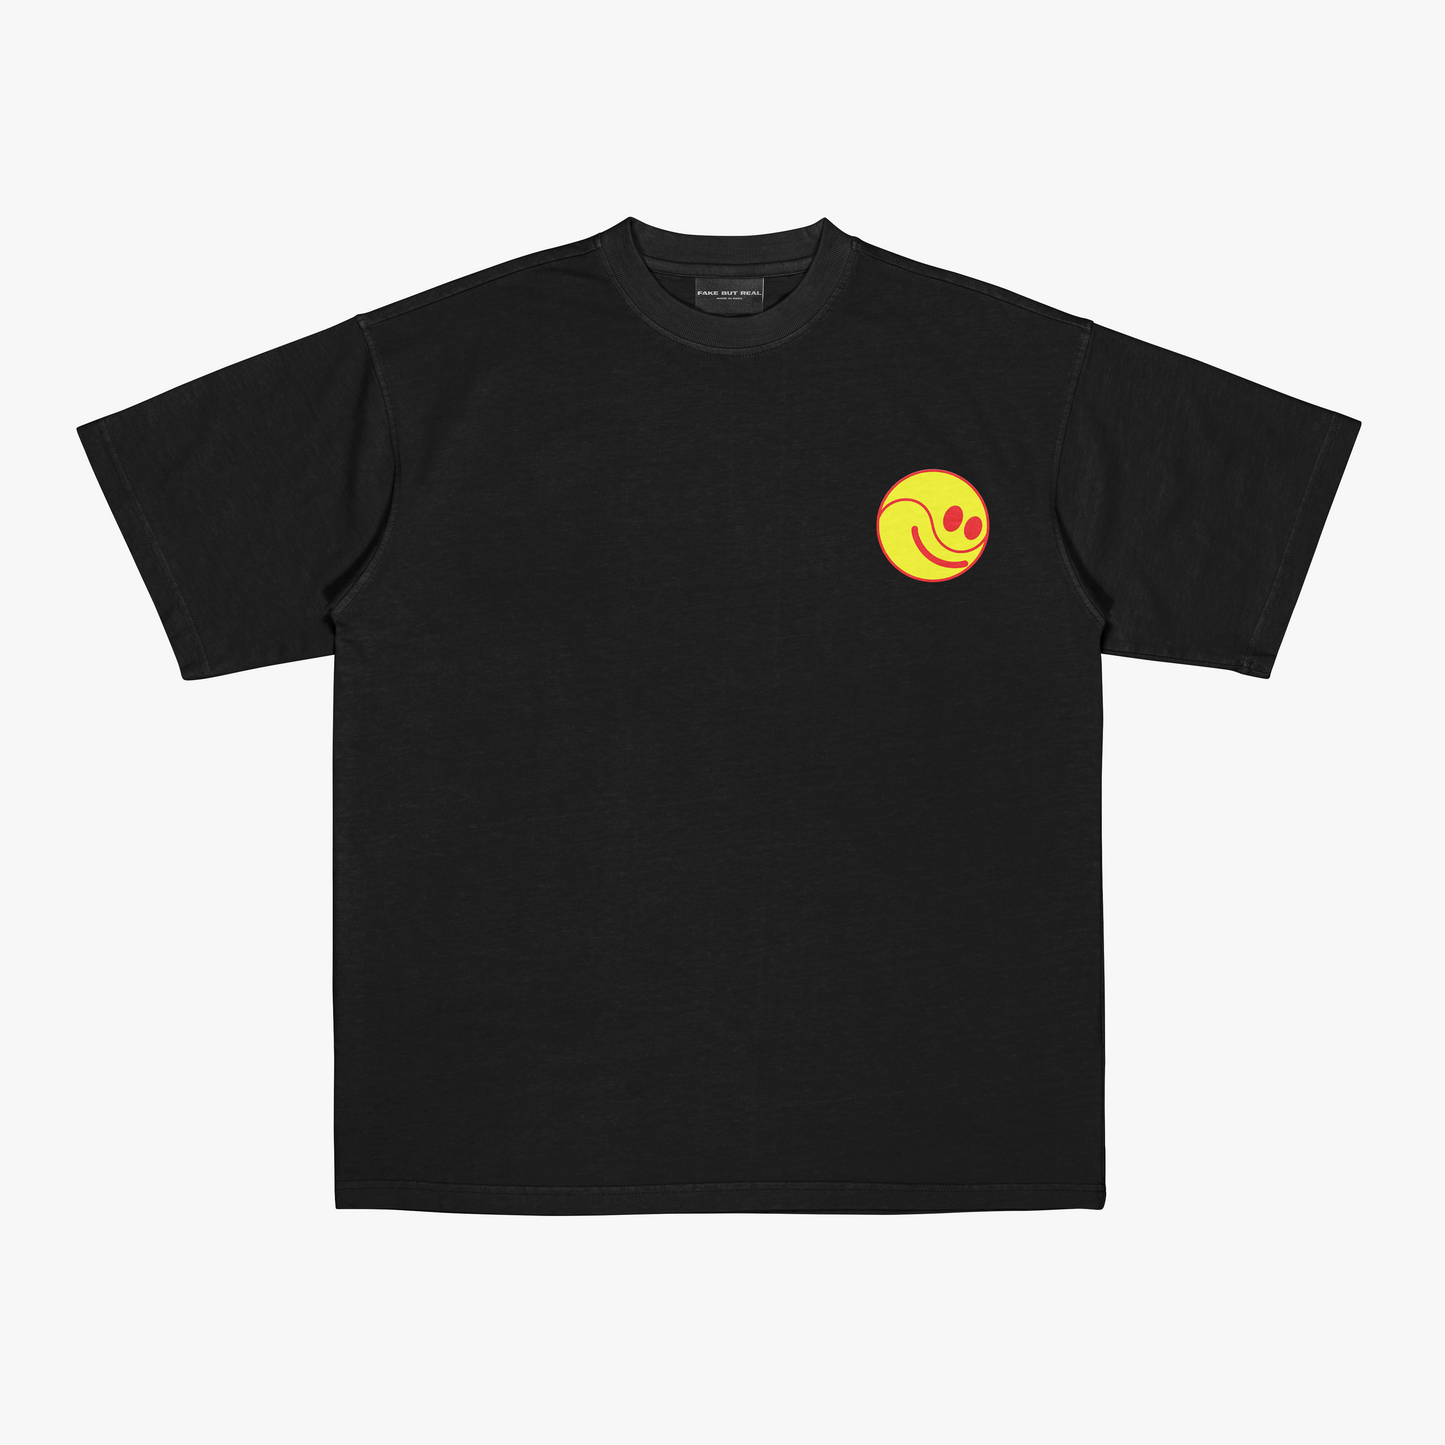 FakeButReal 'Black Sheep' Black Oversize T-Shirt